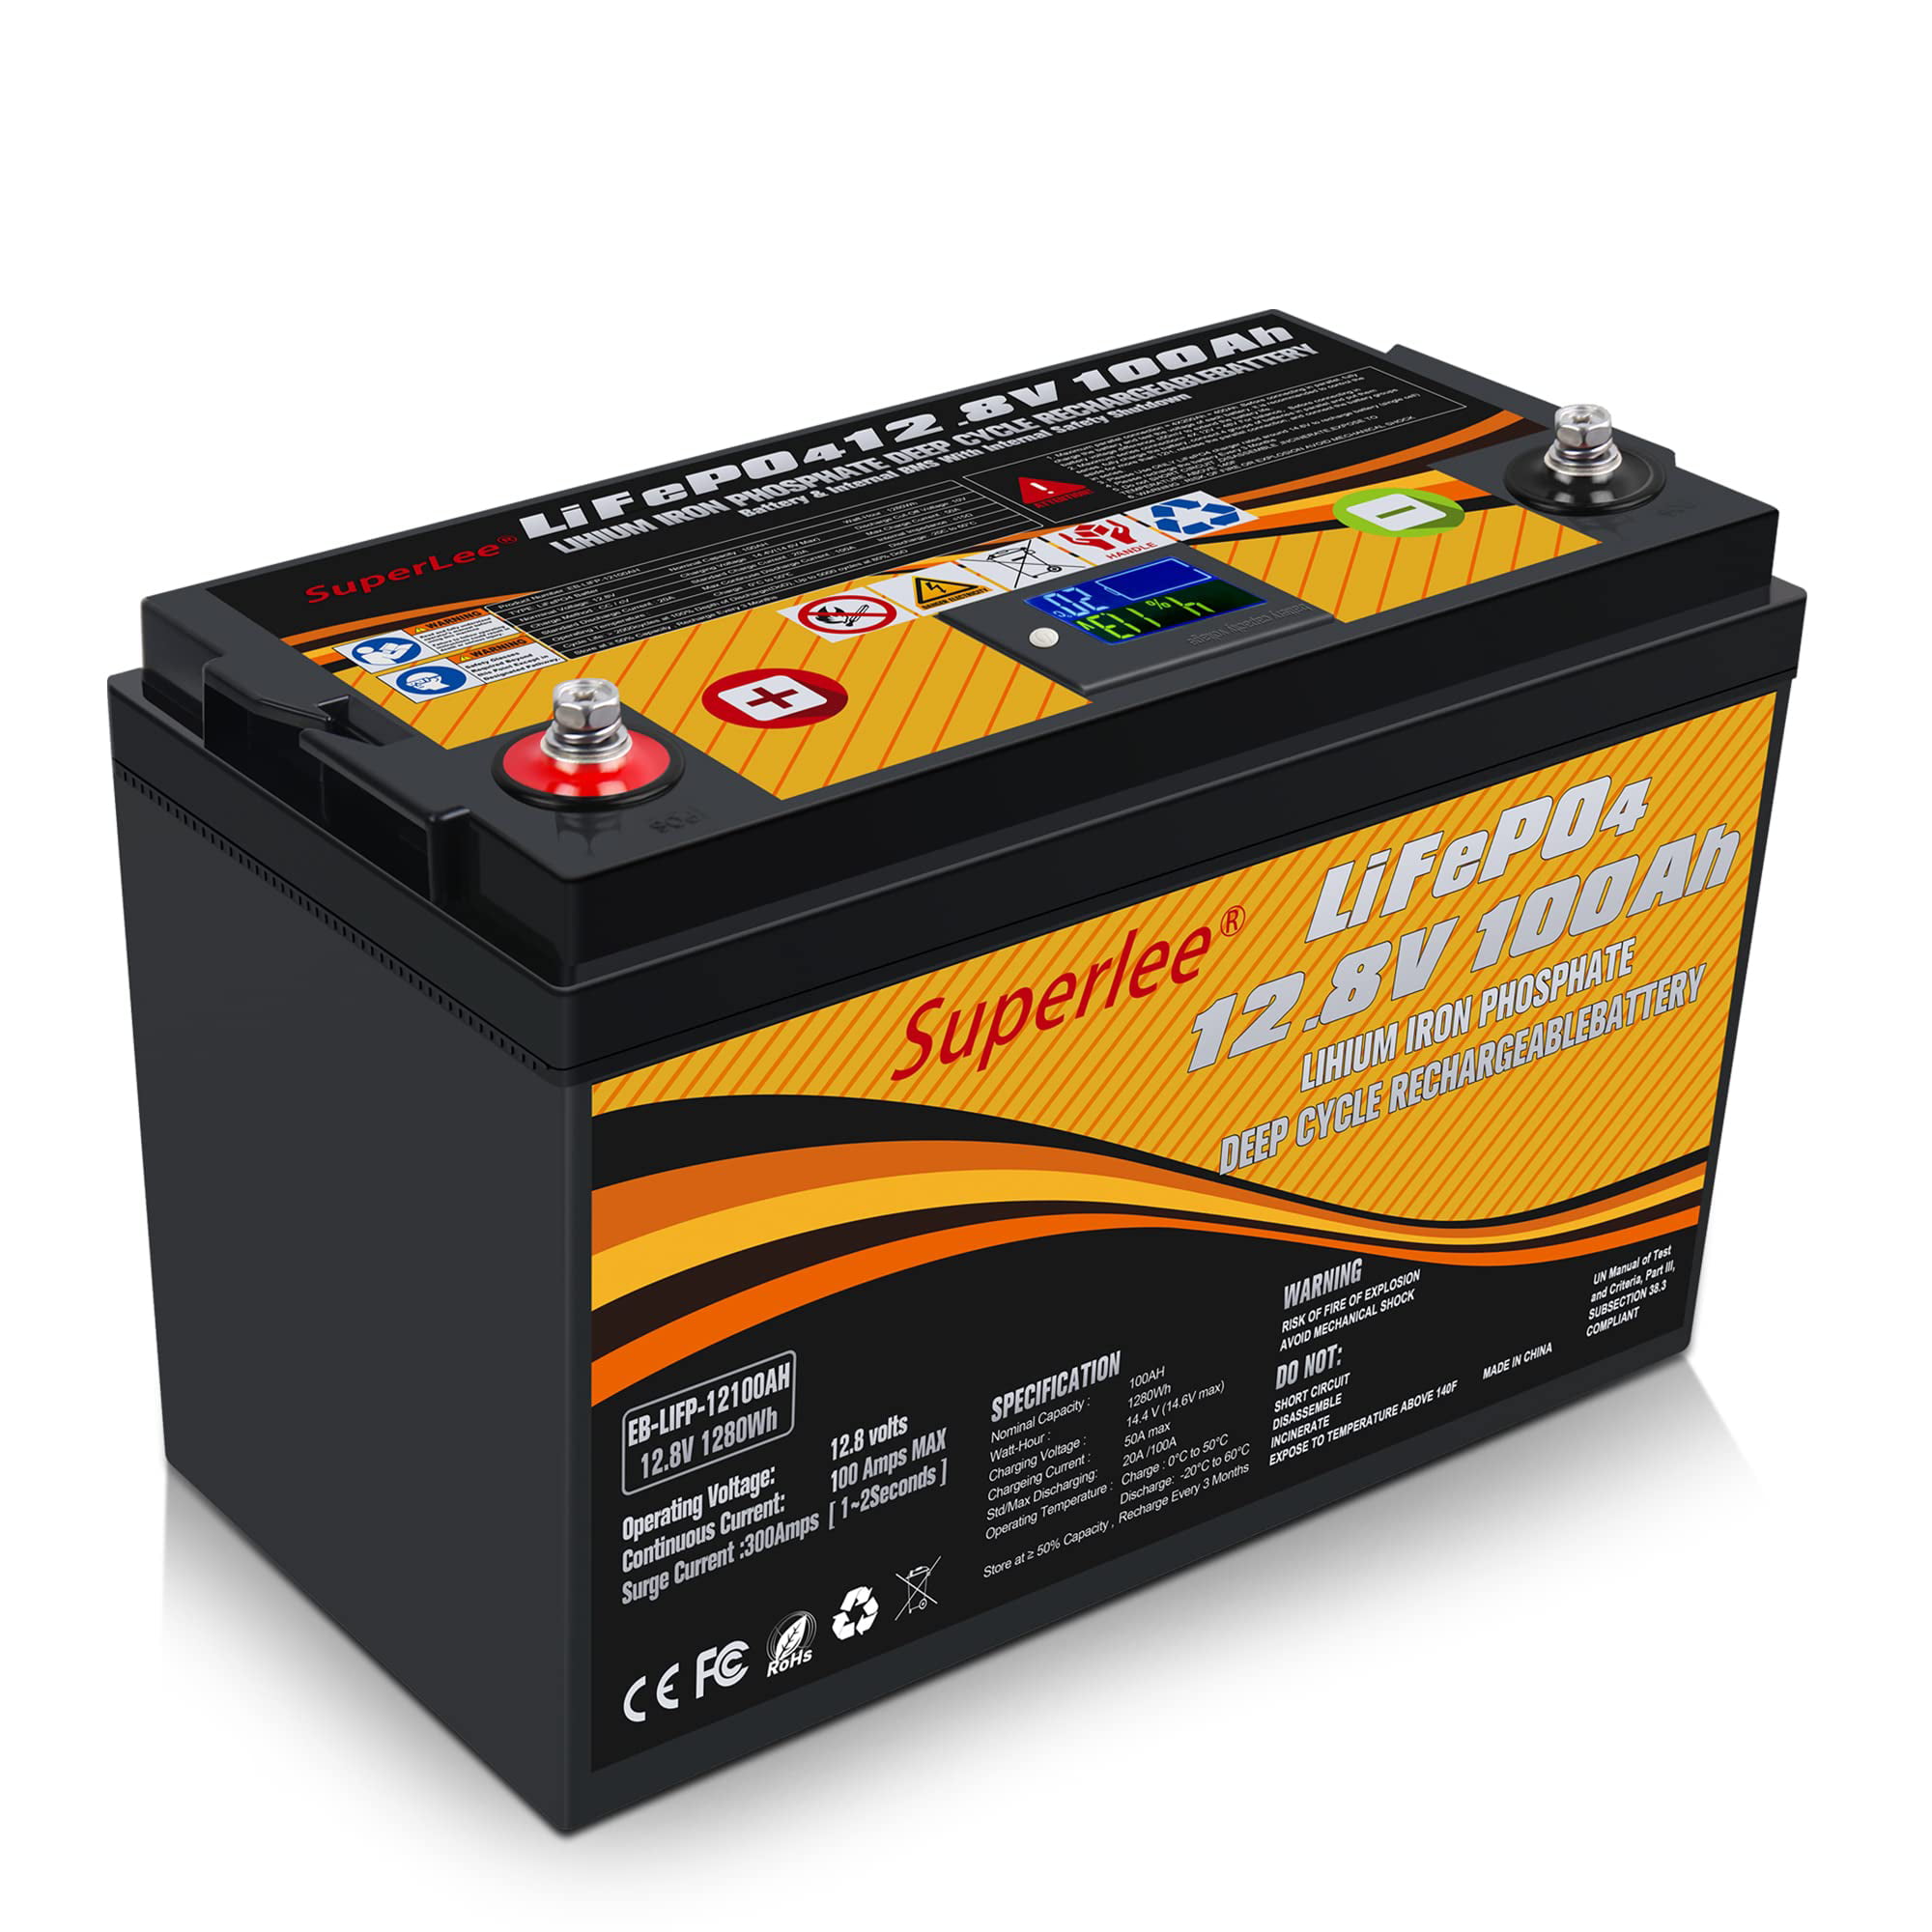 12.8V 100AH LiFePO4 Battery with LCD Display, 5000+ Cycle